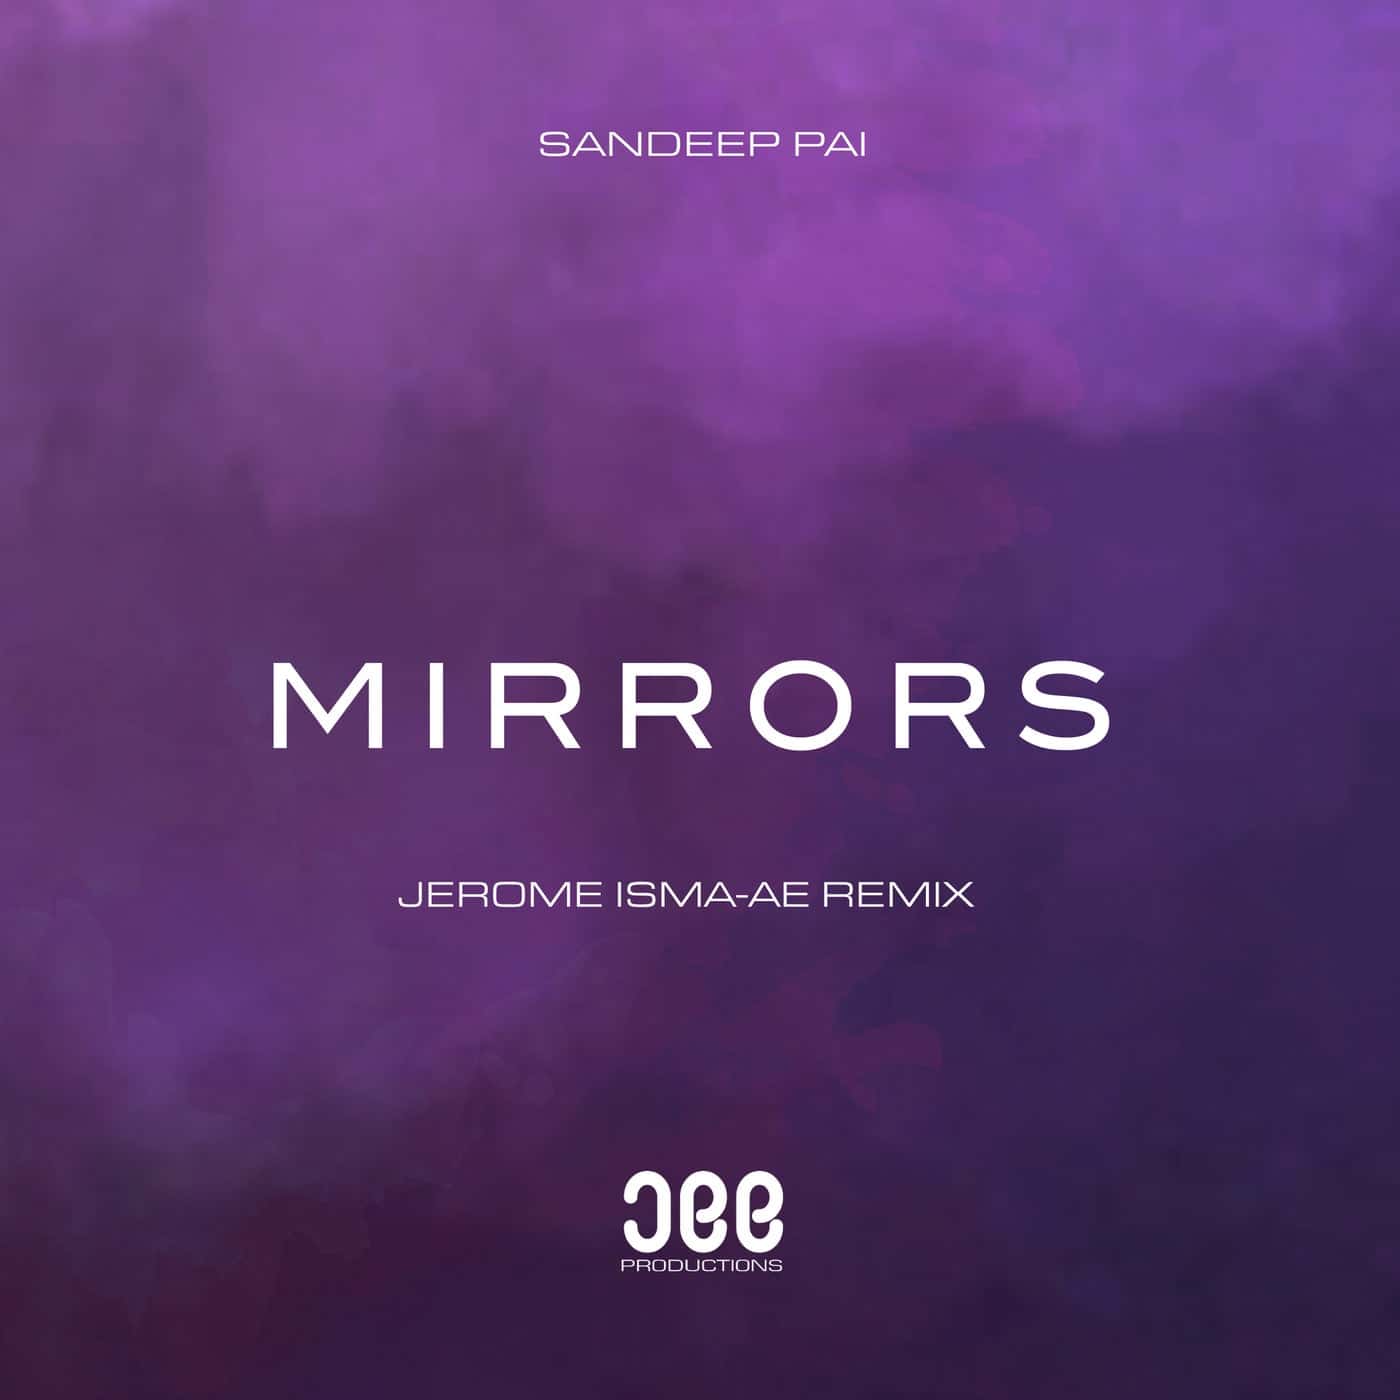 Download Sandeep Pai - Mirrors on Electrobuzz